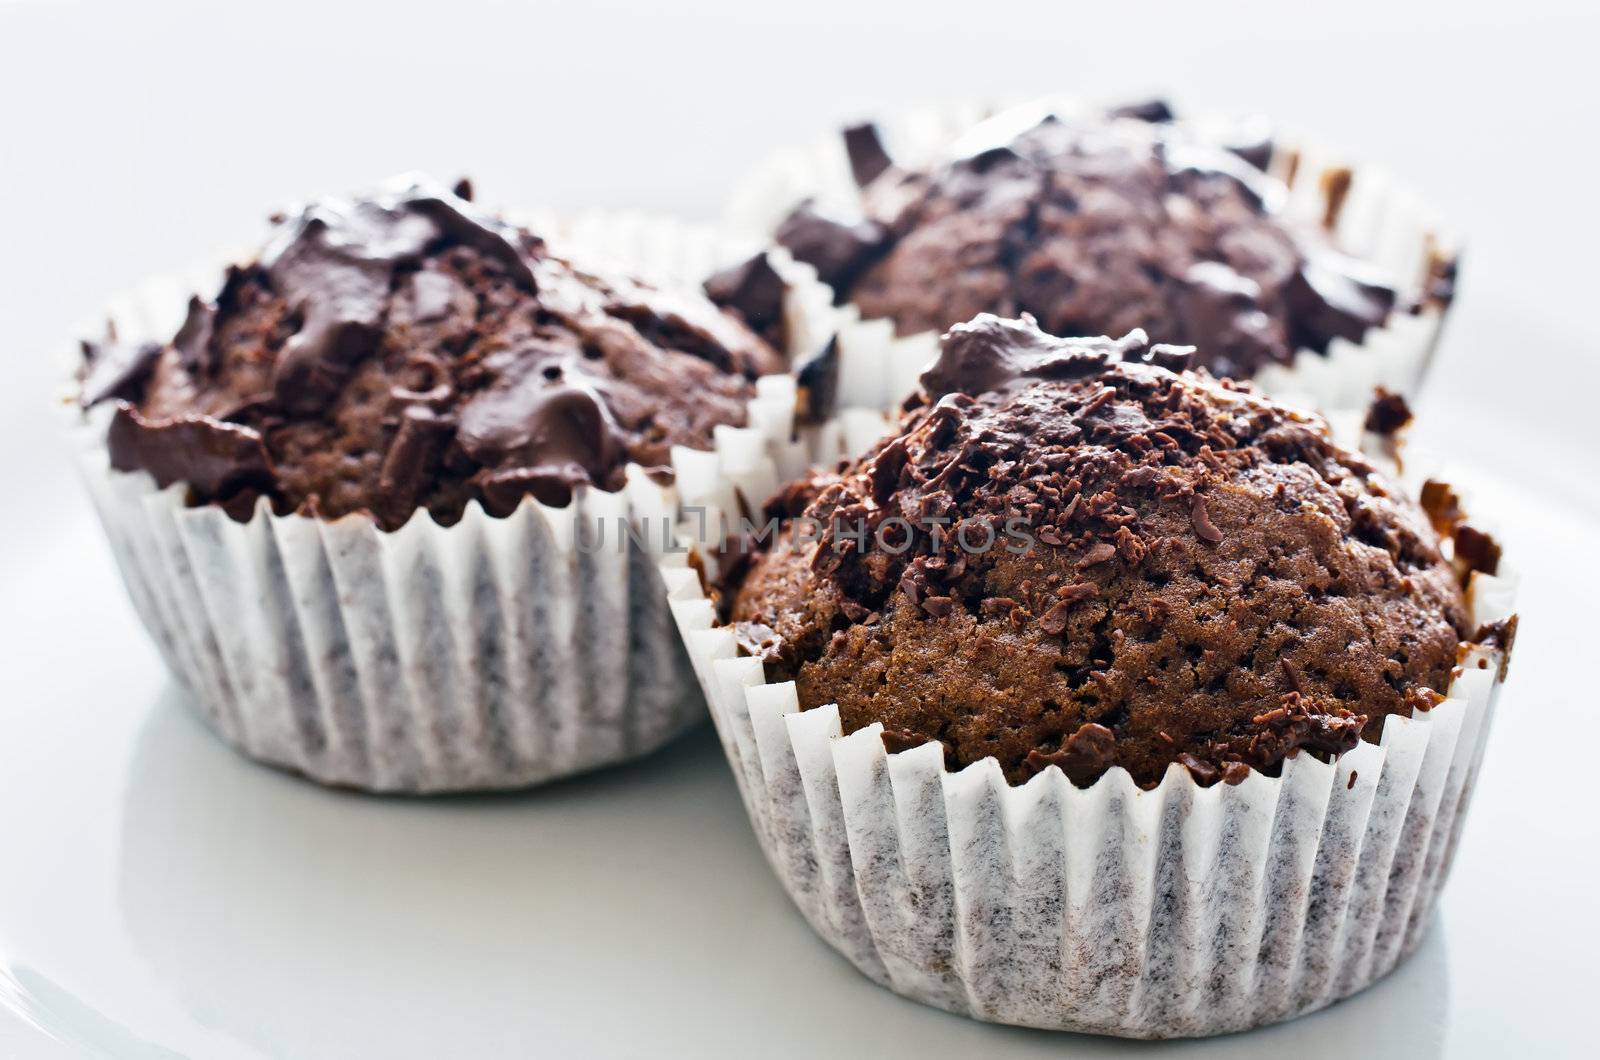 Chocolate muffins by milinz